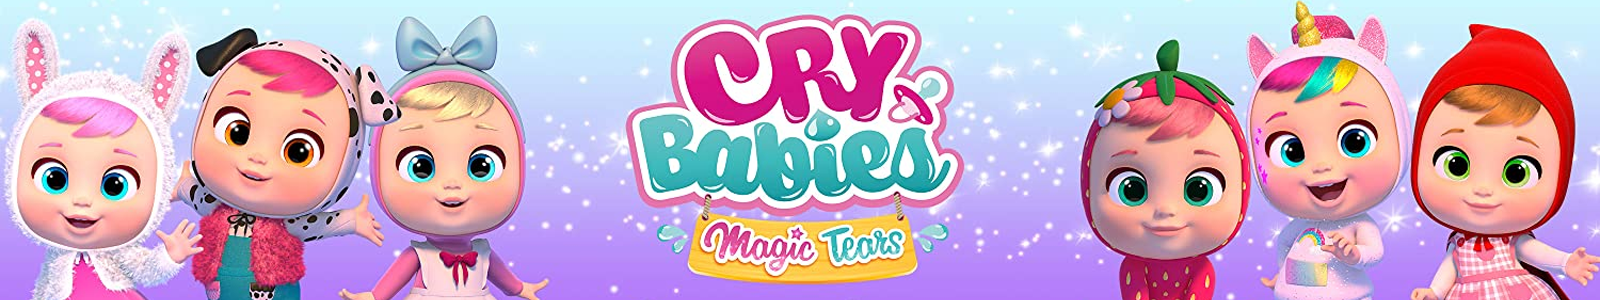 Comprar Cry Babies online